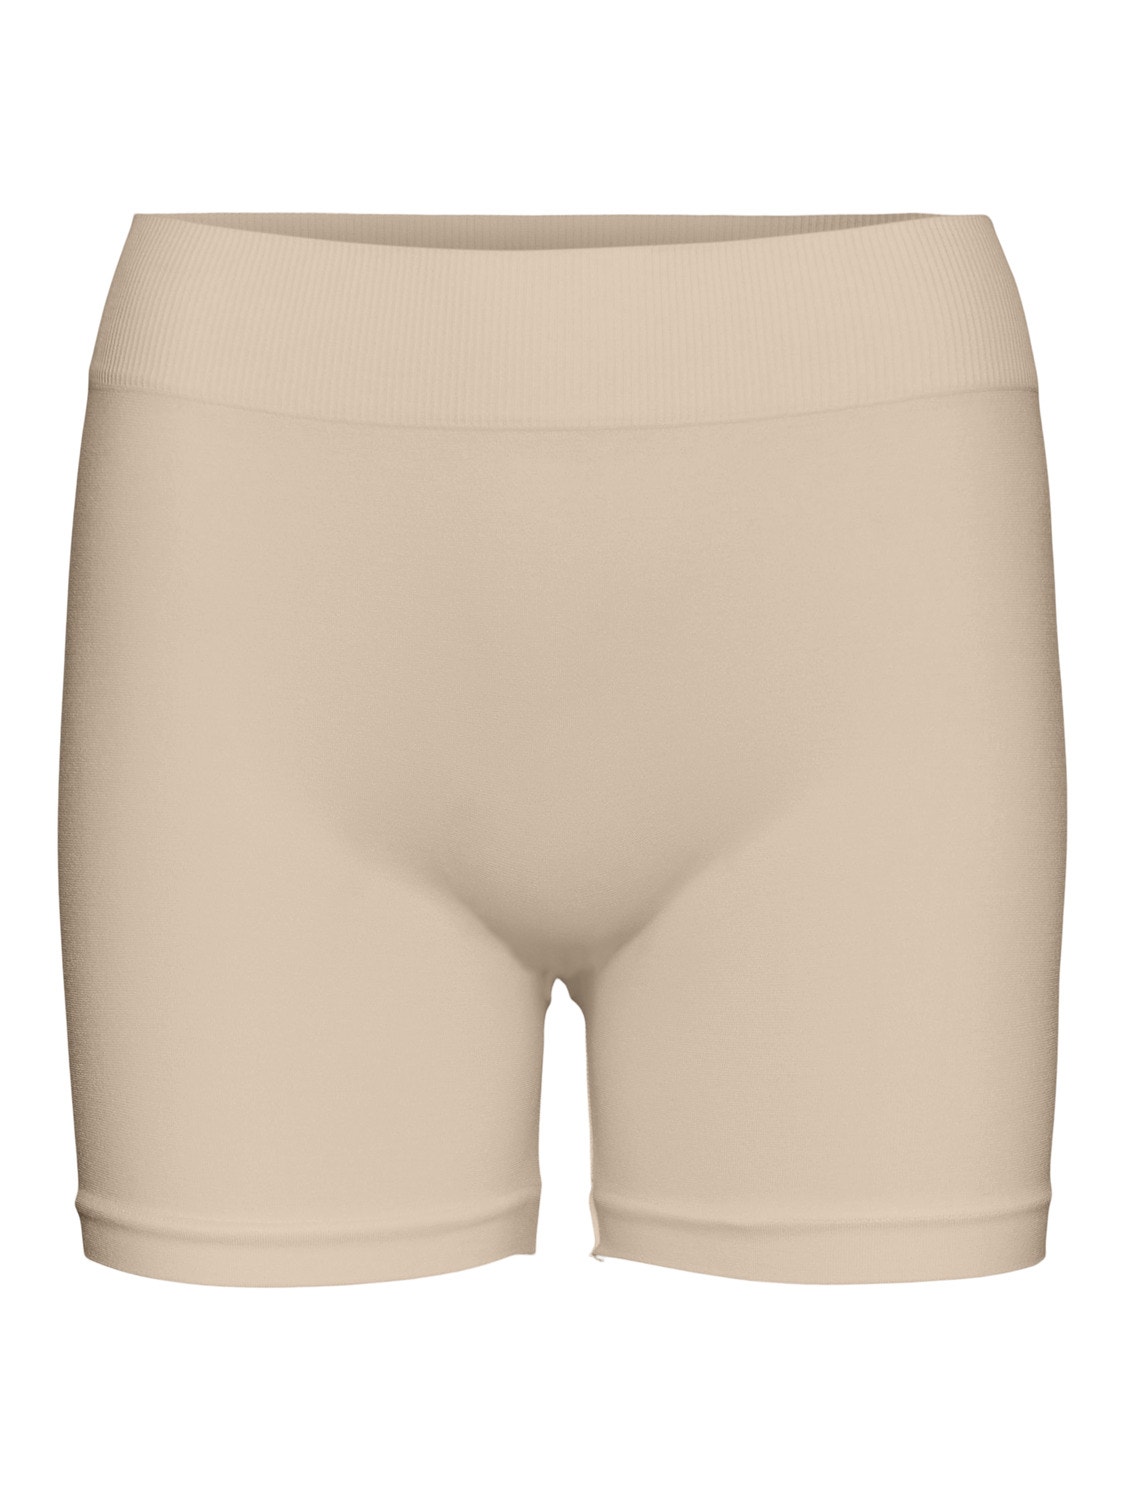 Vero Moda VMJACKIE Underwear -Tan - 10285272